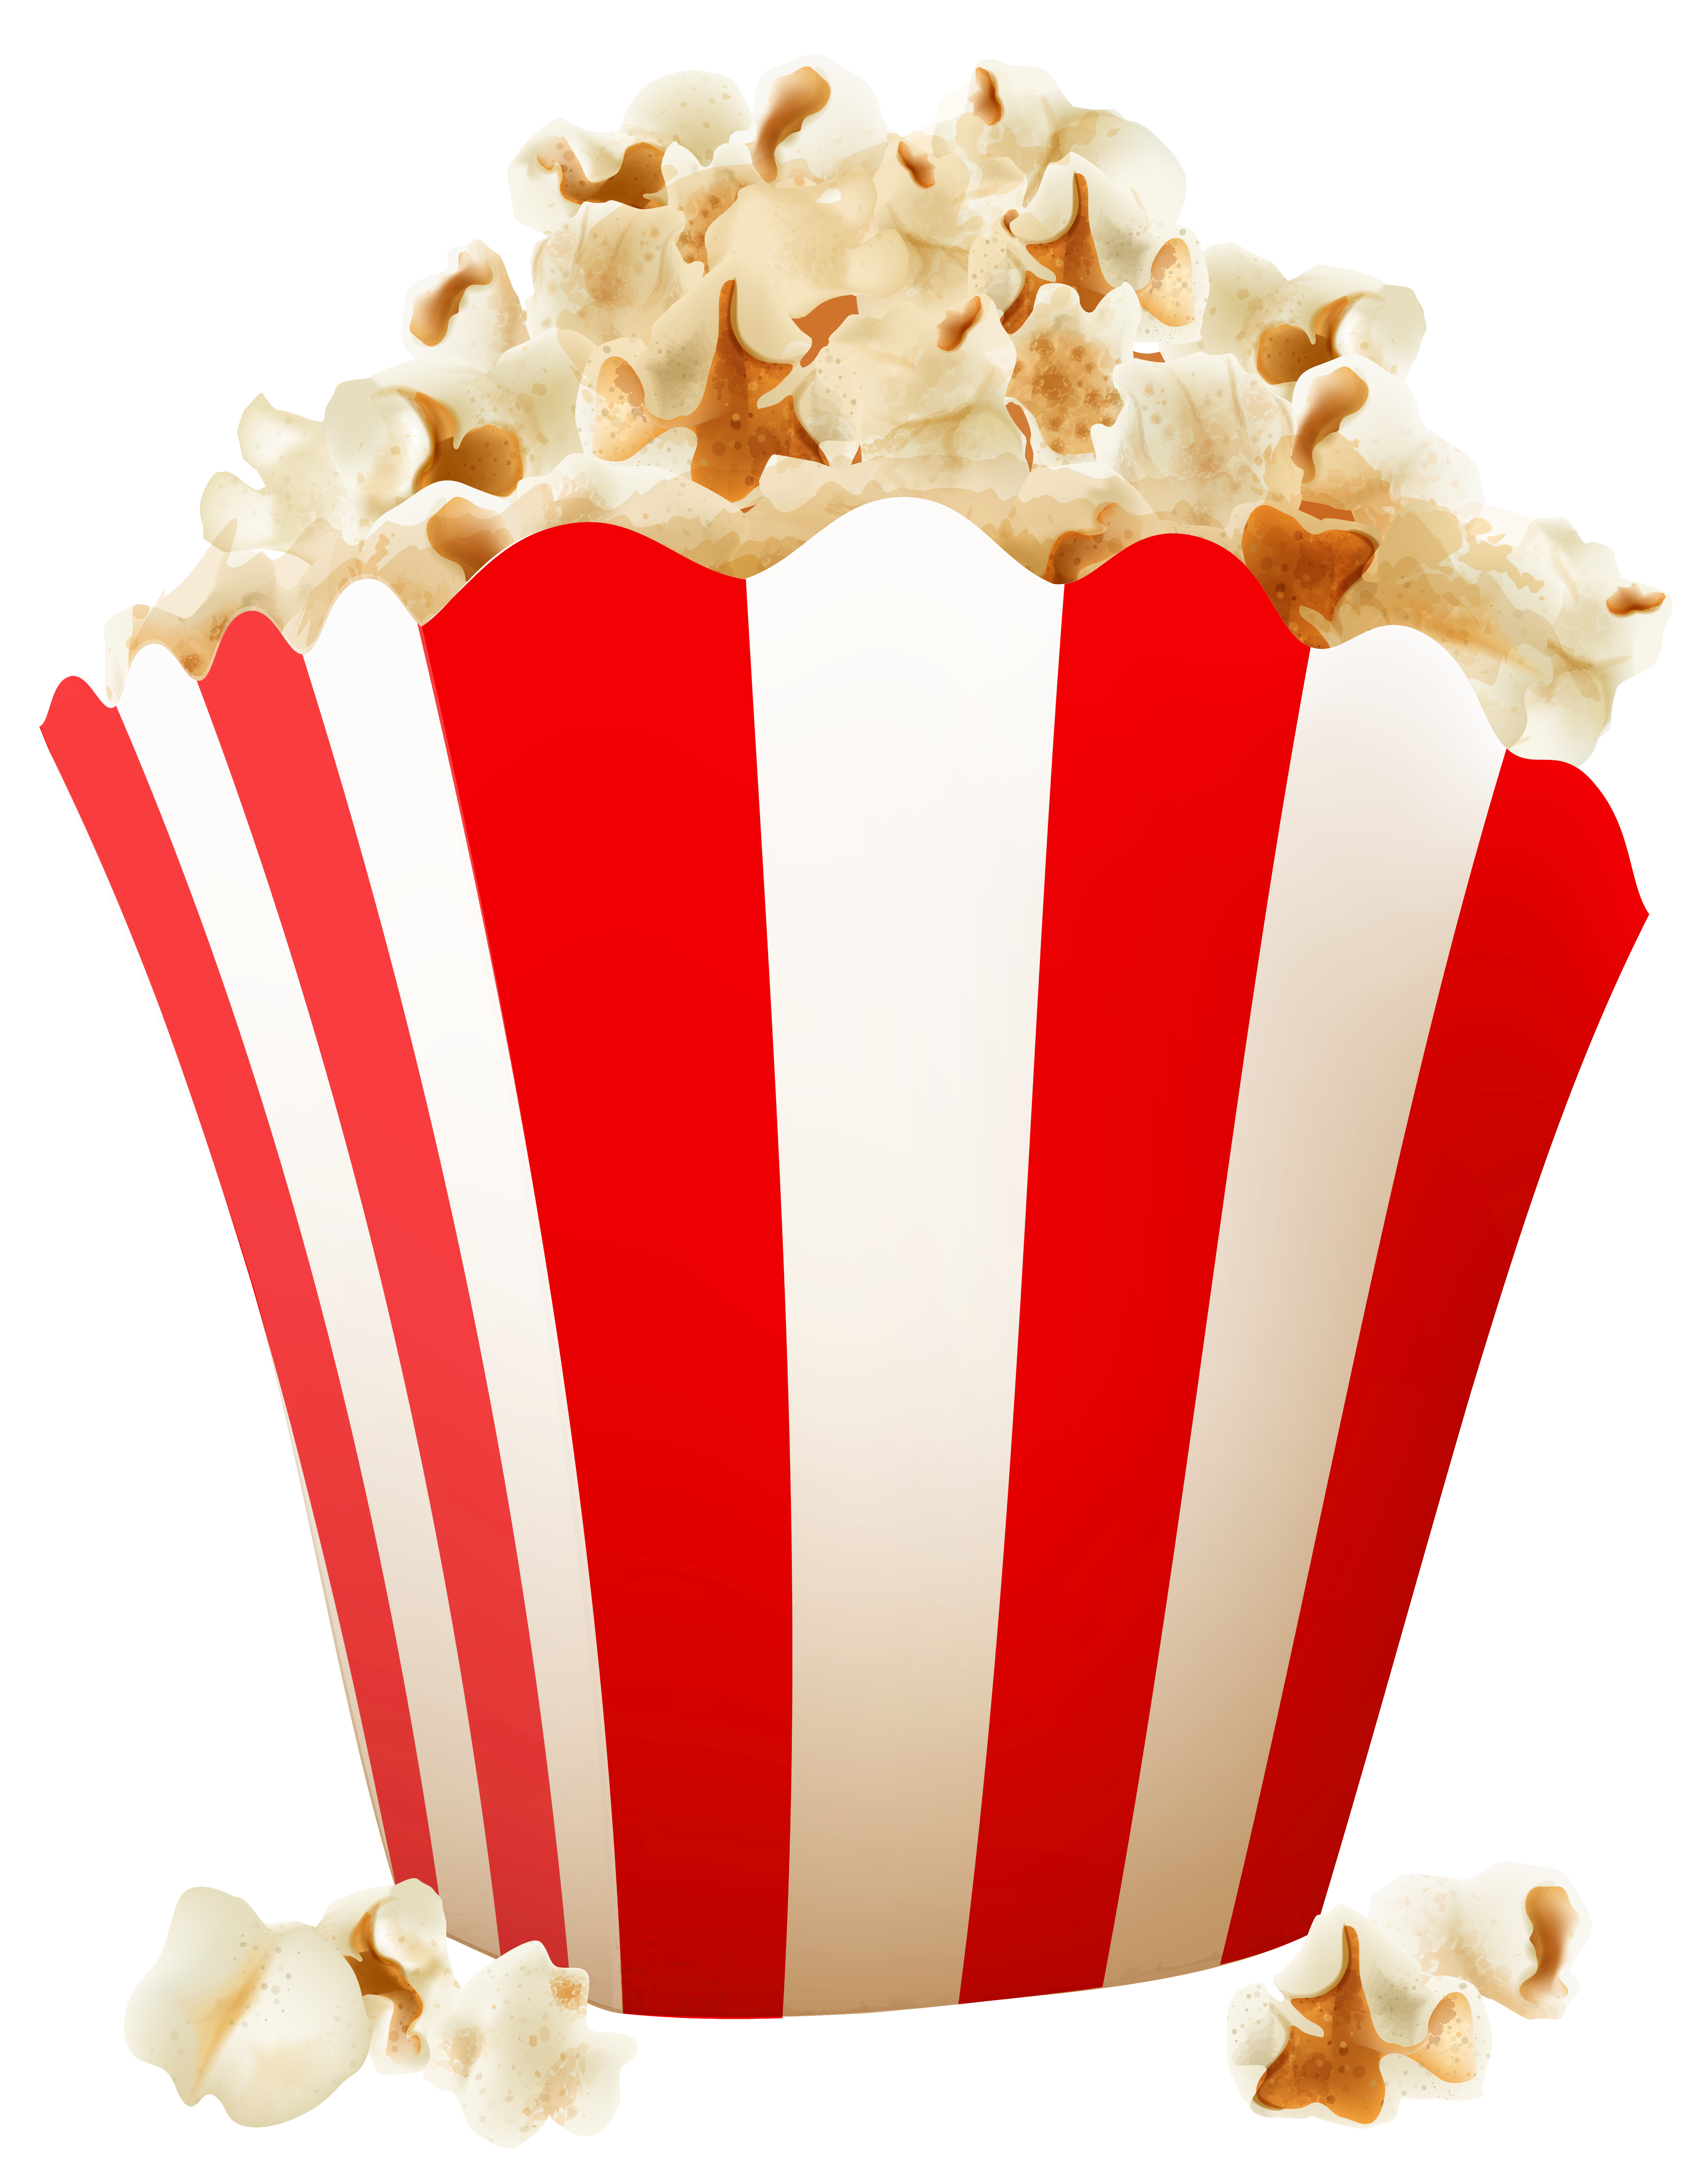 clip art images popcorn - photo #26